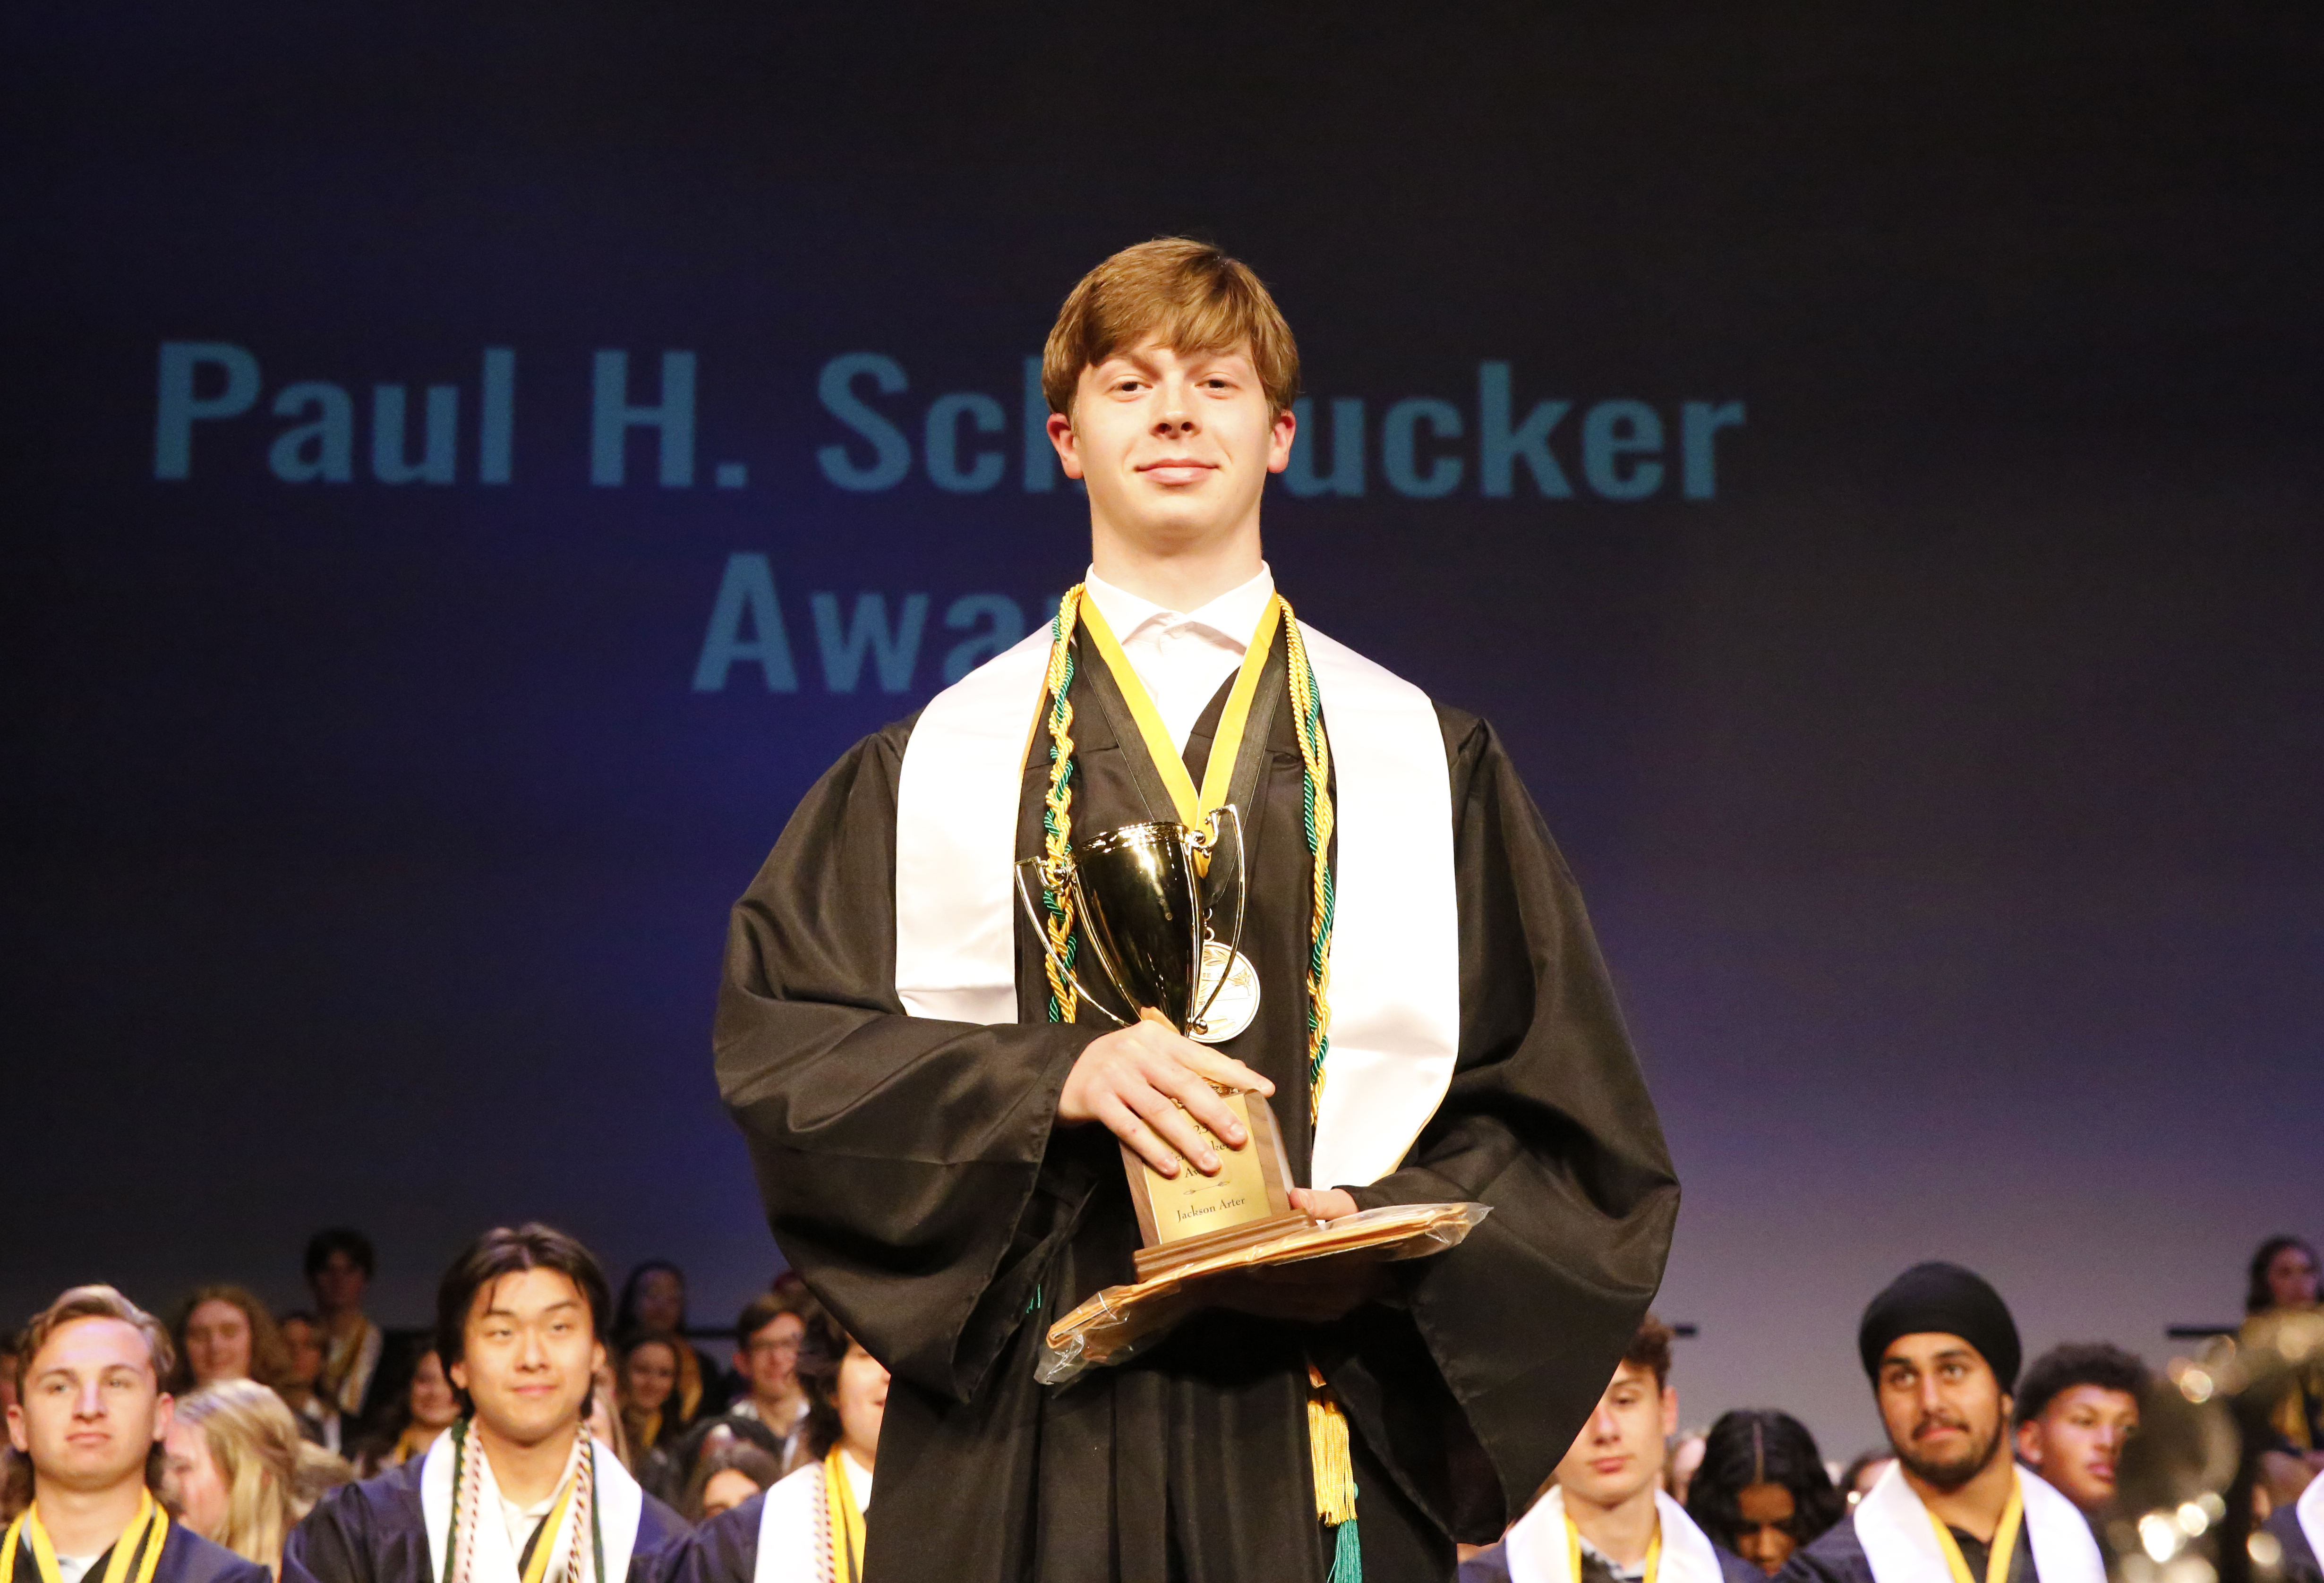 Paul H. Schmucker Award Winner